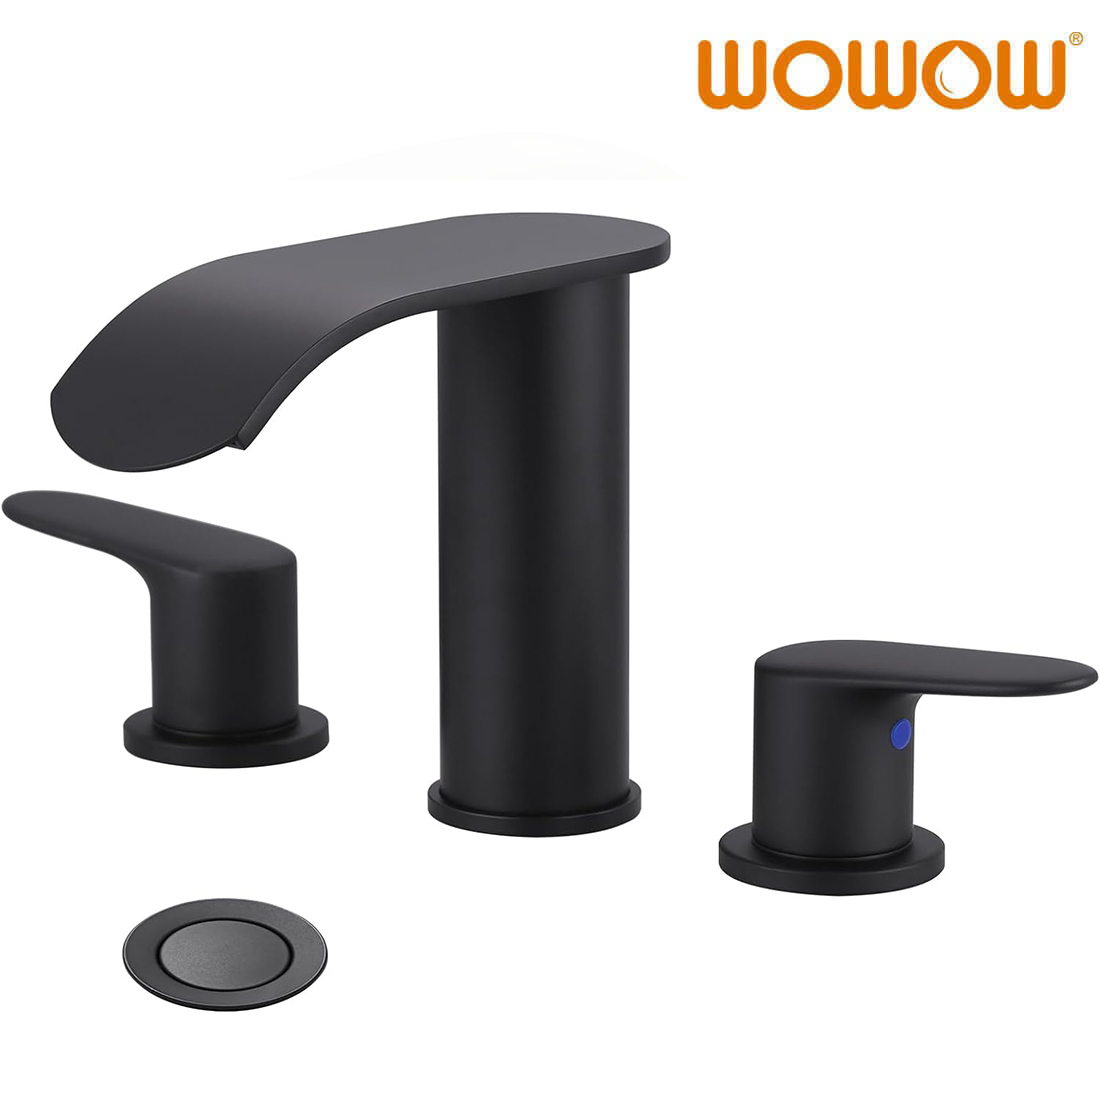 wowow waterfall 8 inch matte black widespread bathroom sink faucet 6